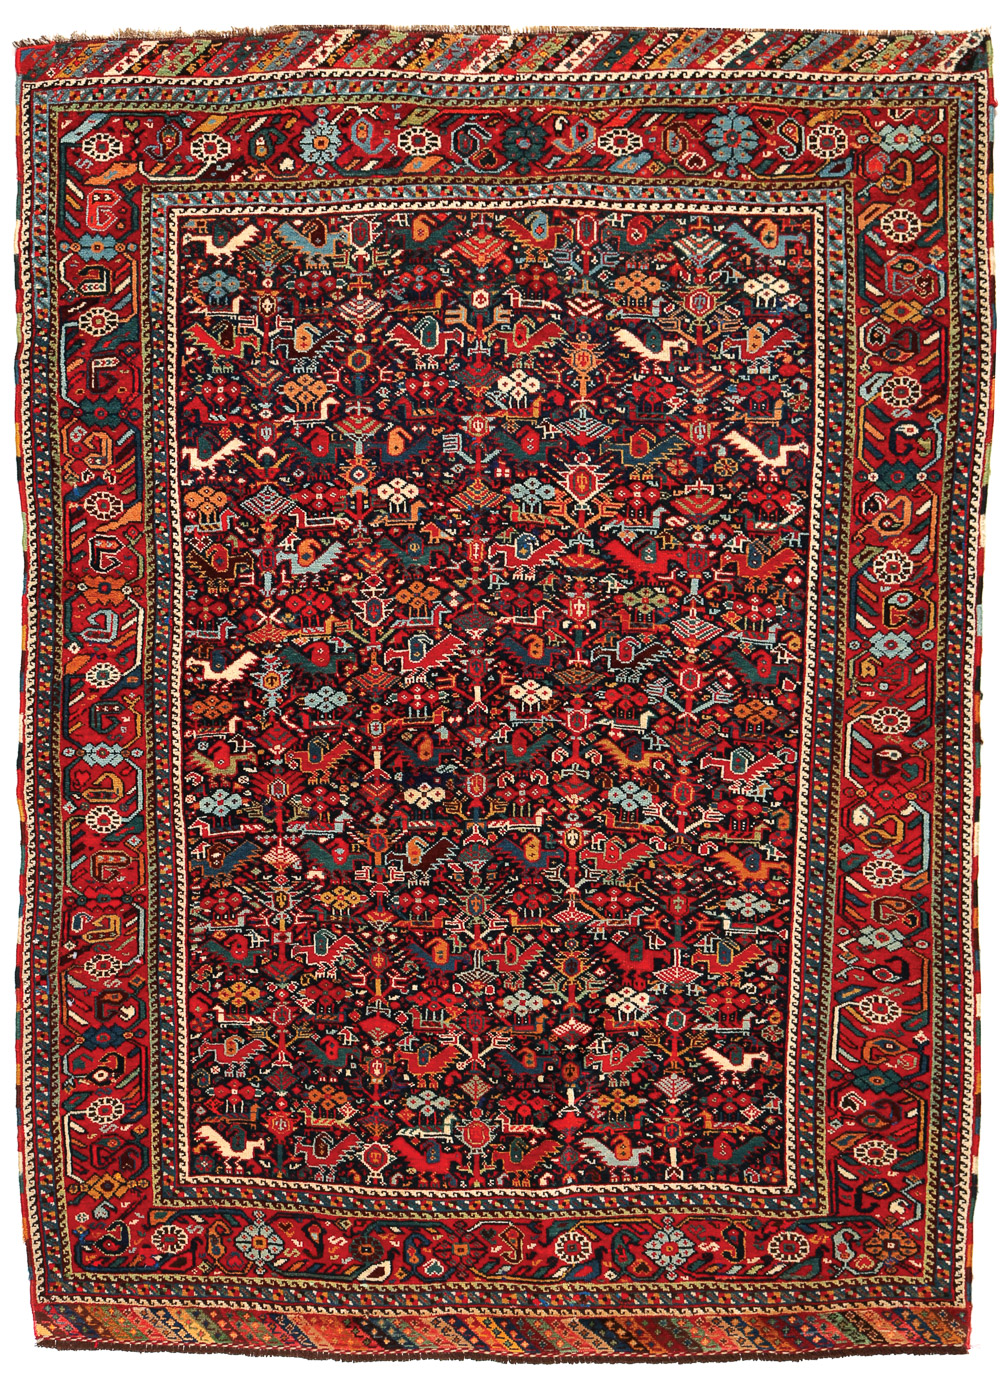 Khamseh murgh design rug, 137 x 194 cm